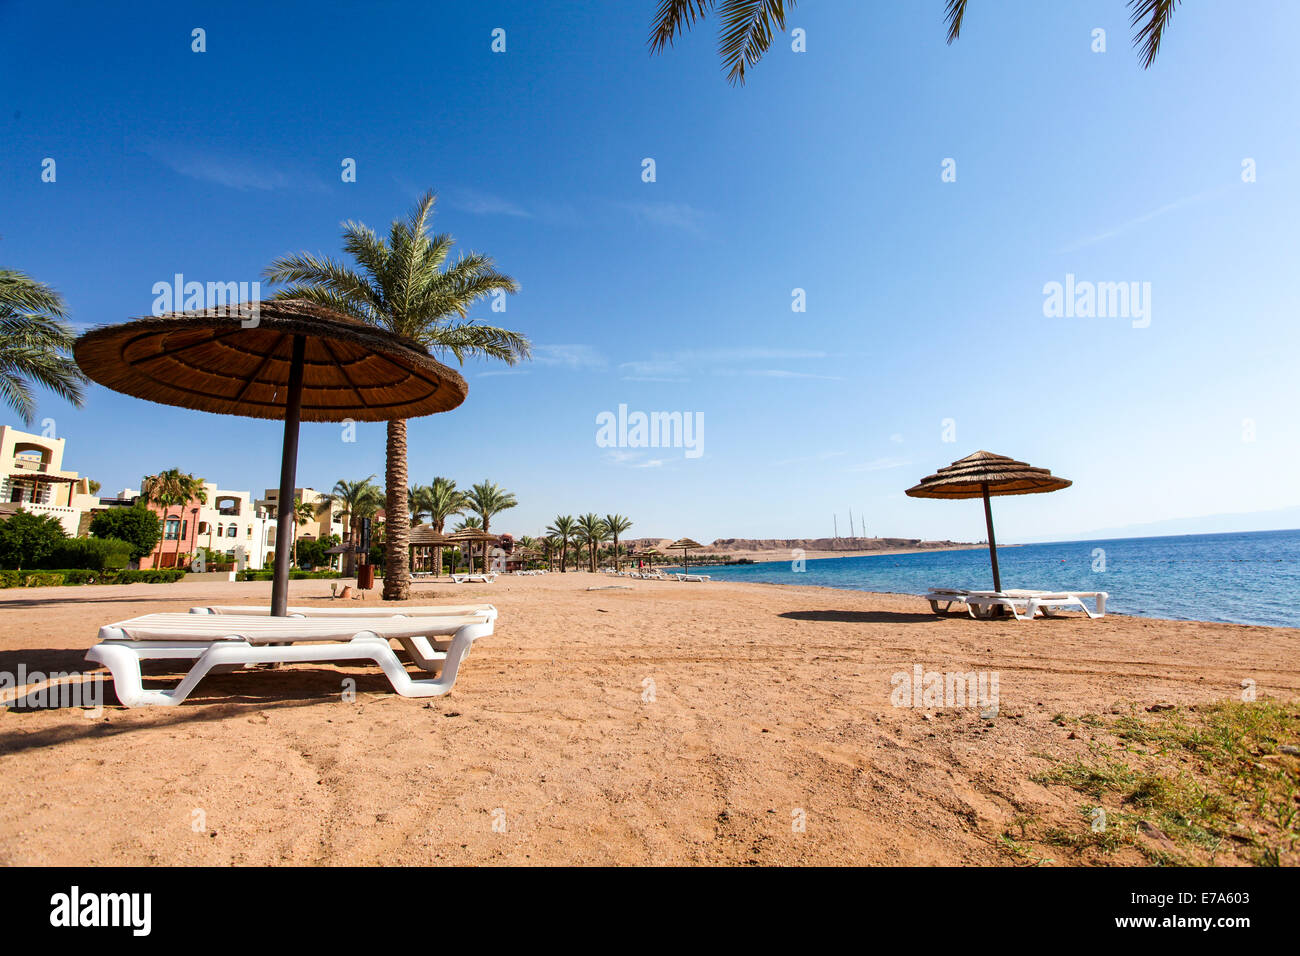 Jordan, Aqaba, Tala Bay beach with a parasol and sunning beds Stock Photo